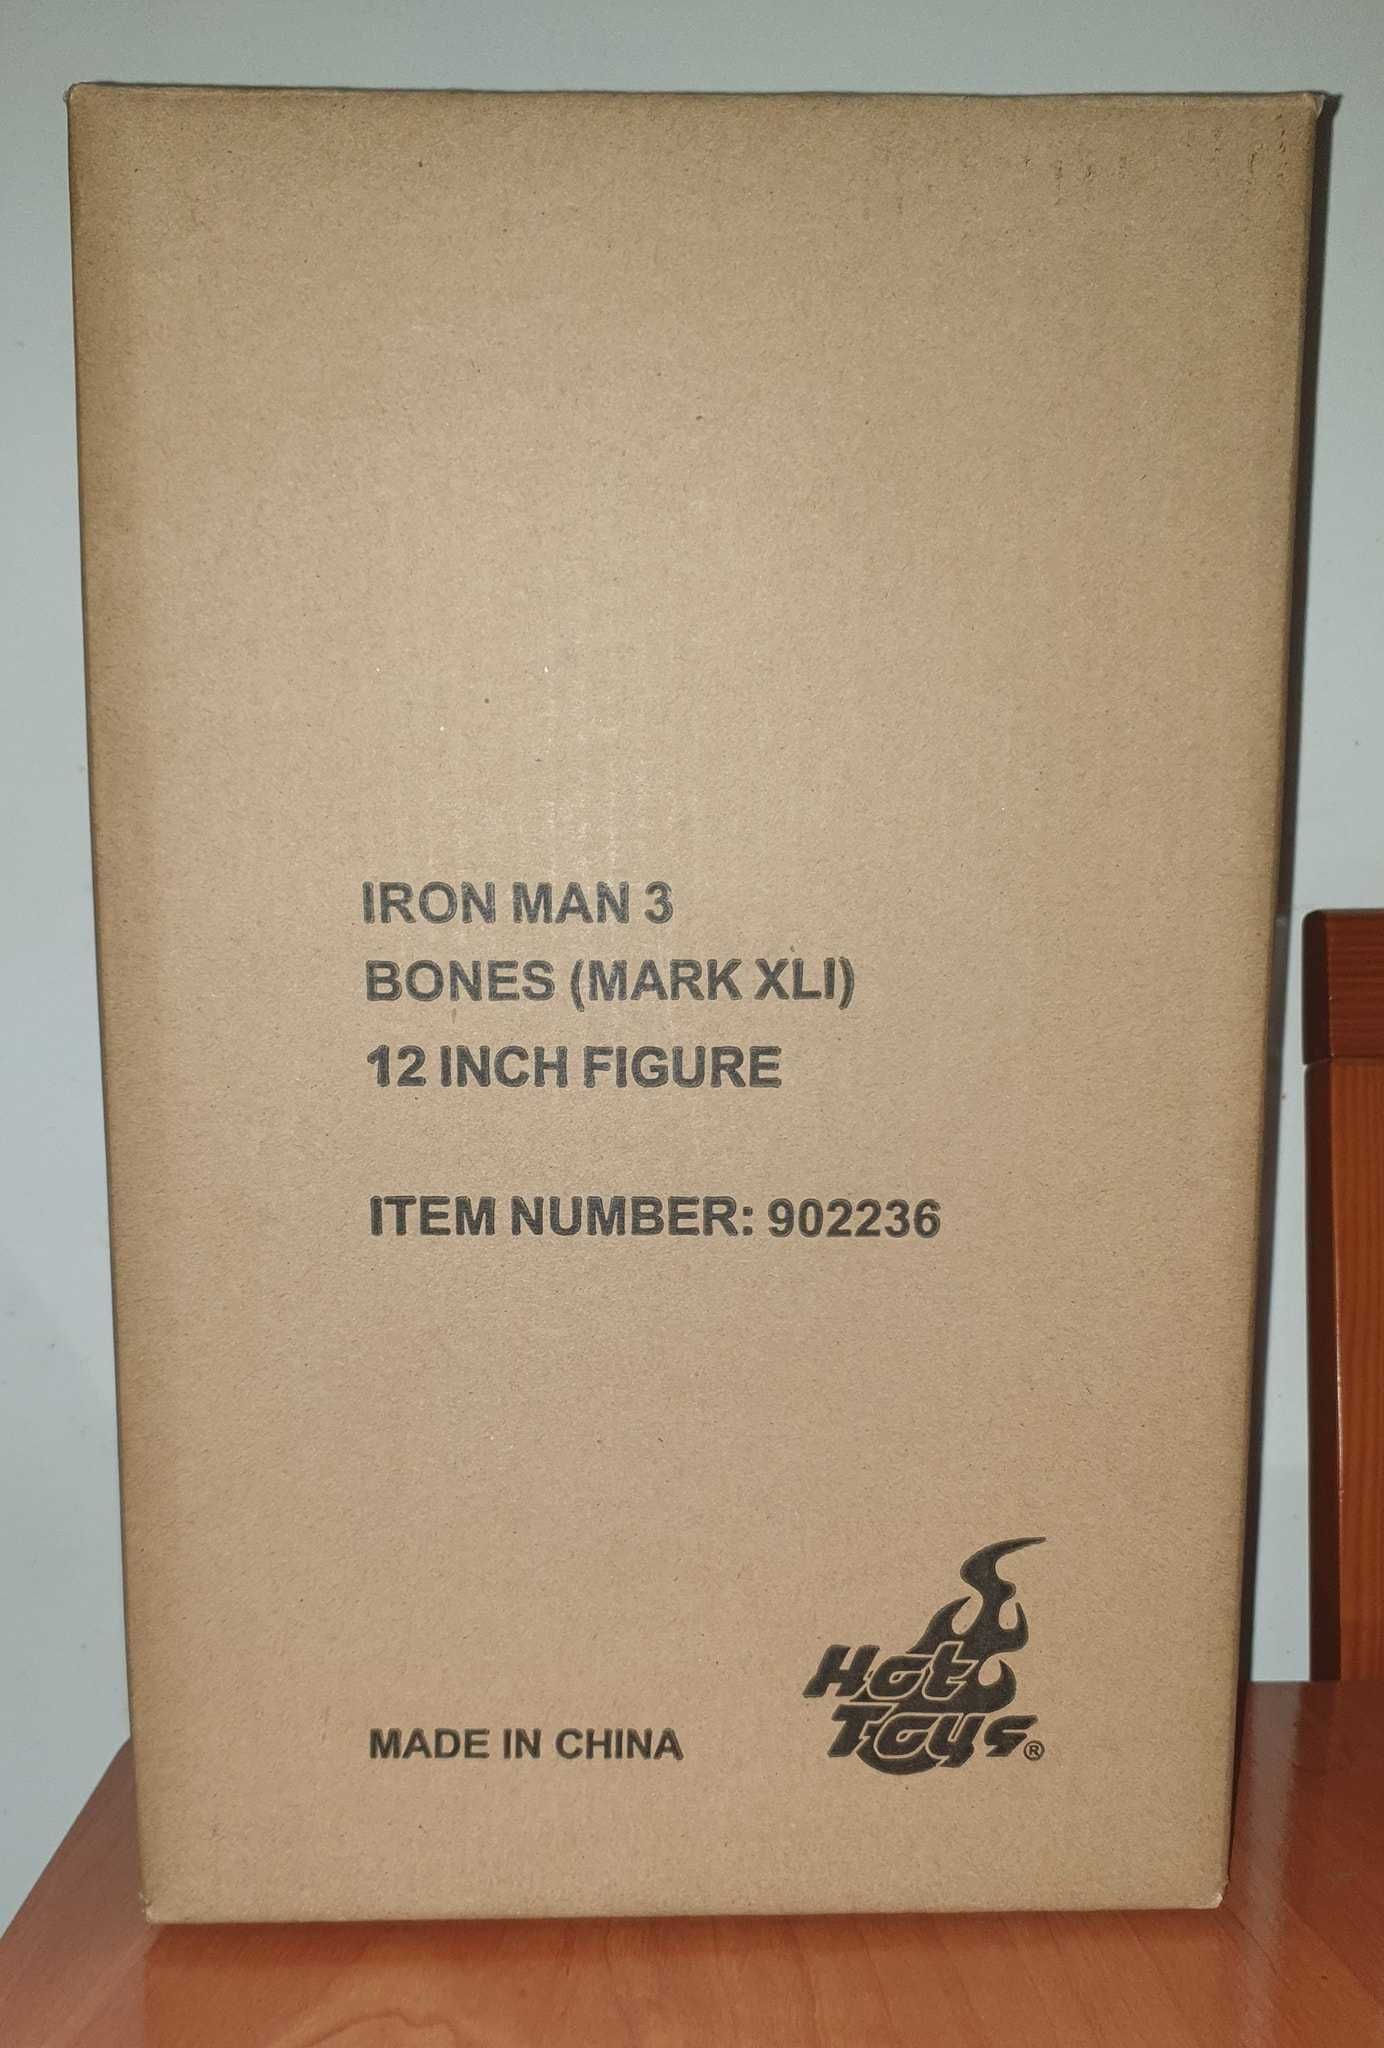 HOT TOYS Iron Man 3 Bones (Mark XLI) 1/6th Scale Collectible Figure.